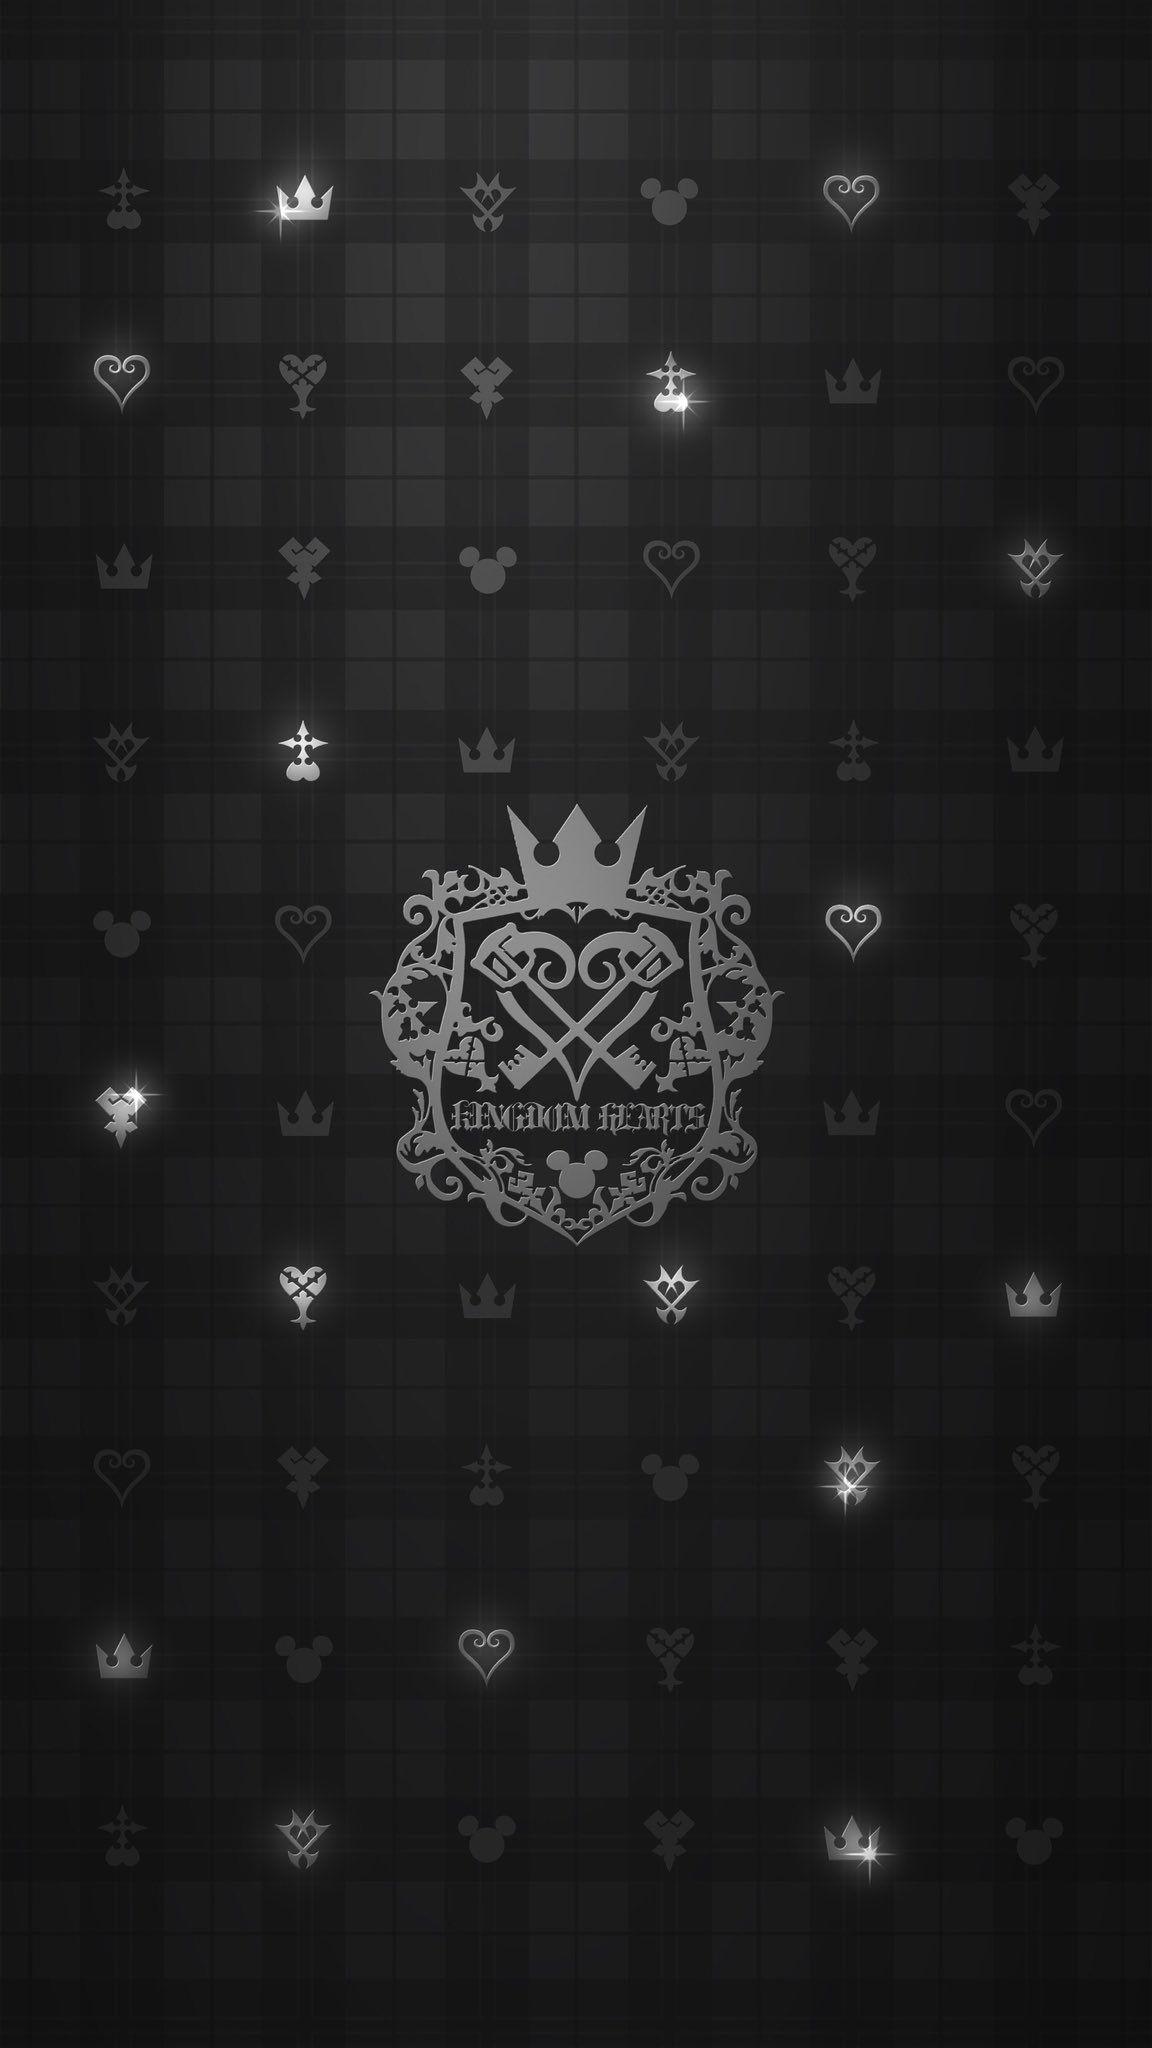 Kingdom Hearts. Kingdom hearts wallpaper, Kingdom hearts, Heart wallpaper